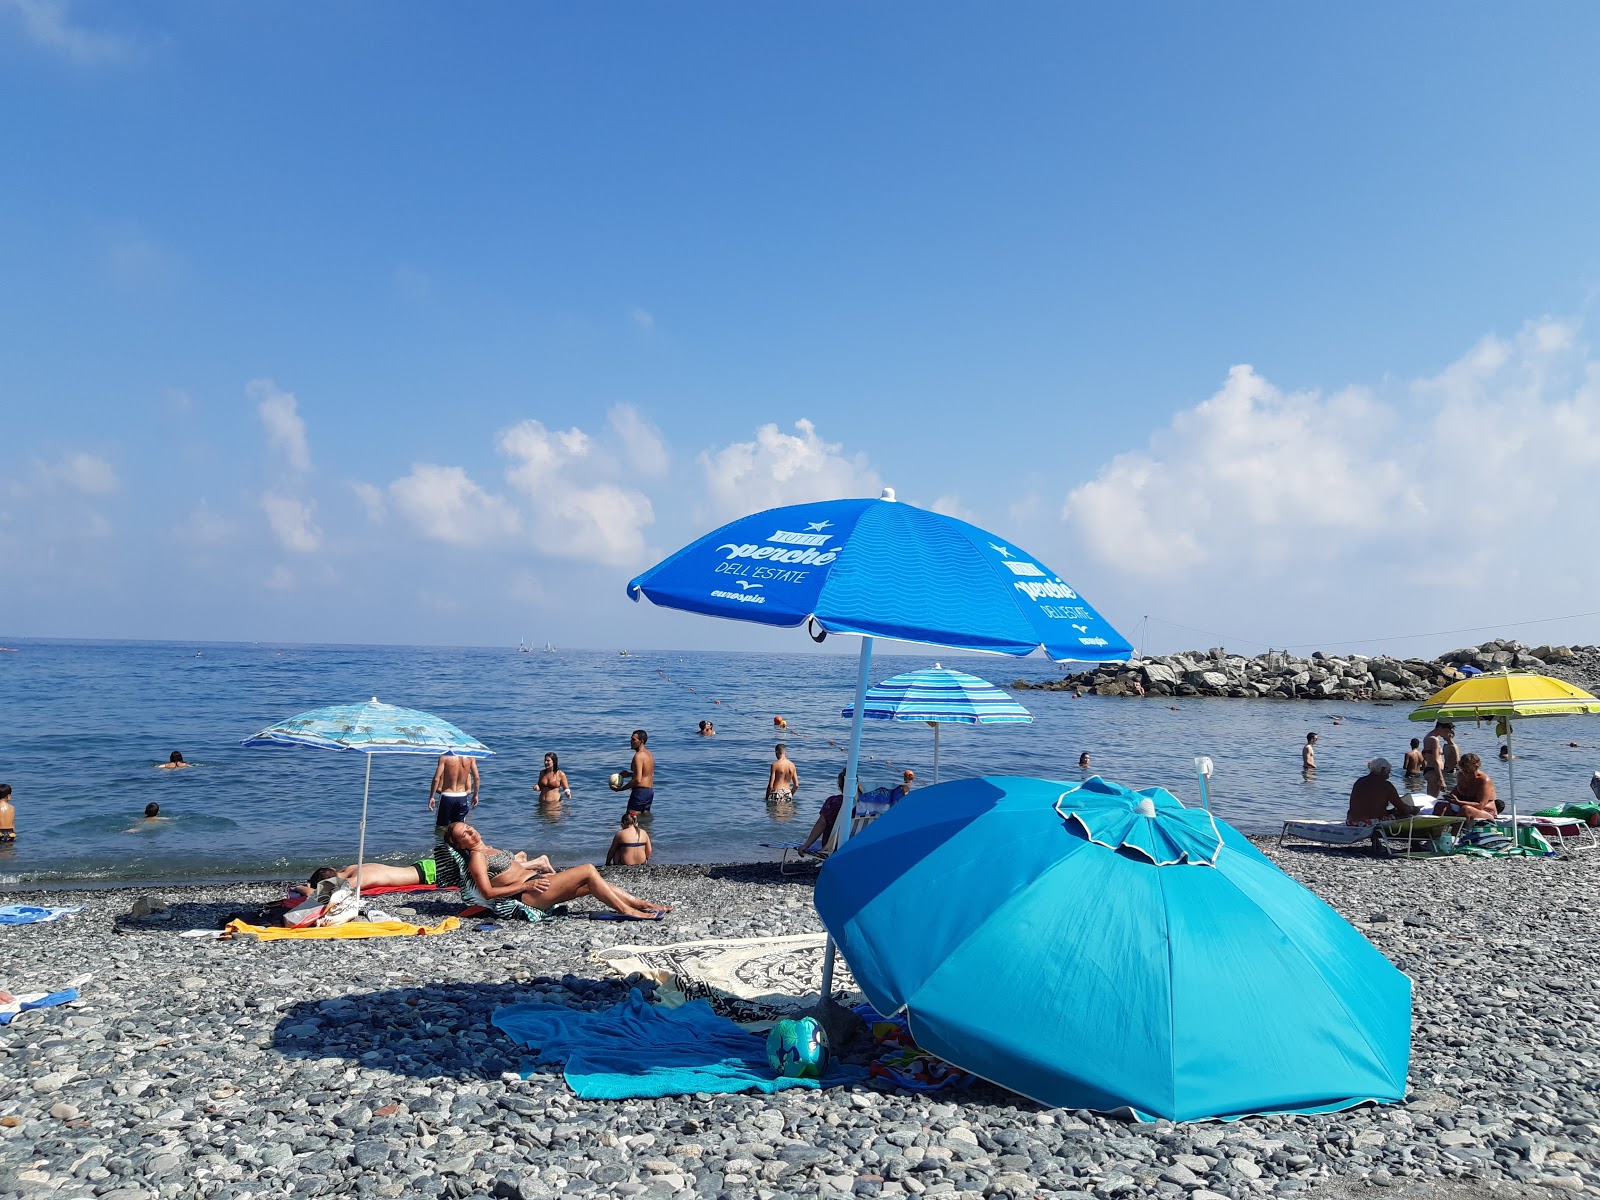 Spiaggia Olanda的照片 带有蓝色纯水表面